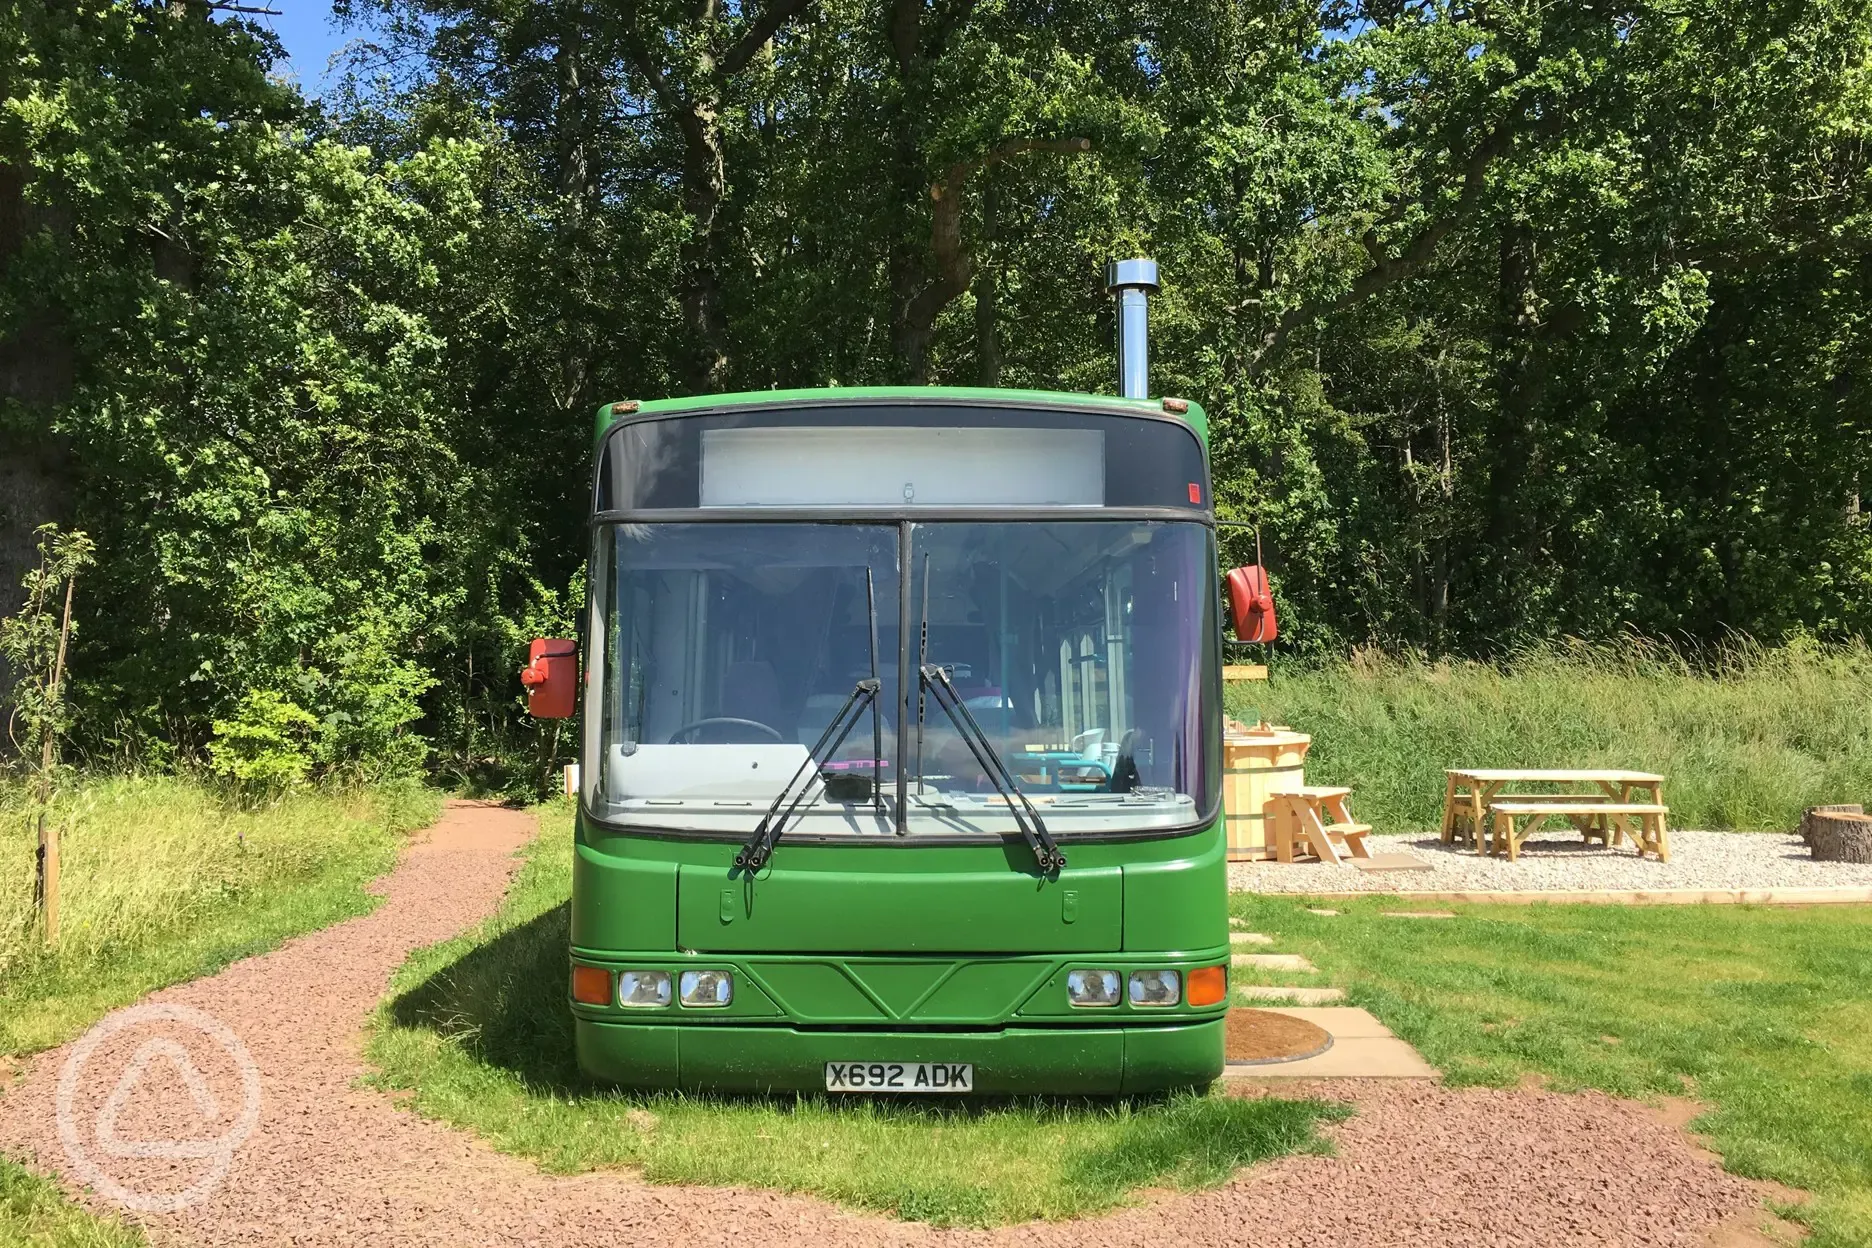 Eco bus